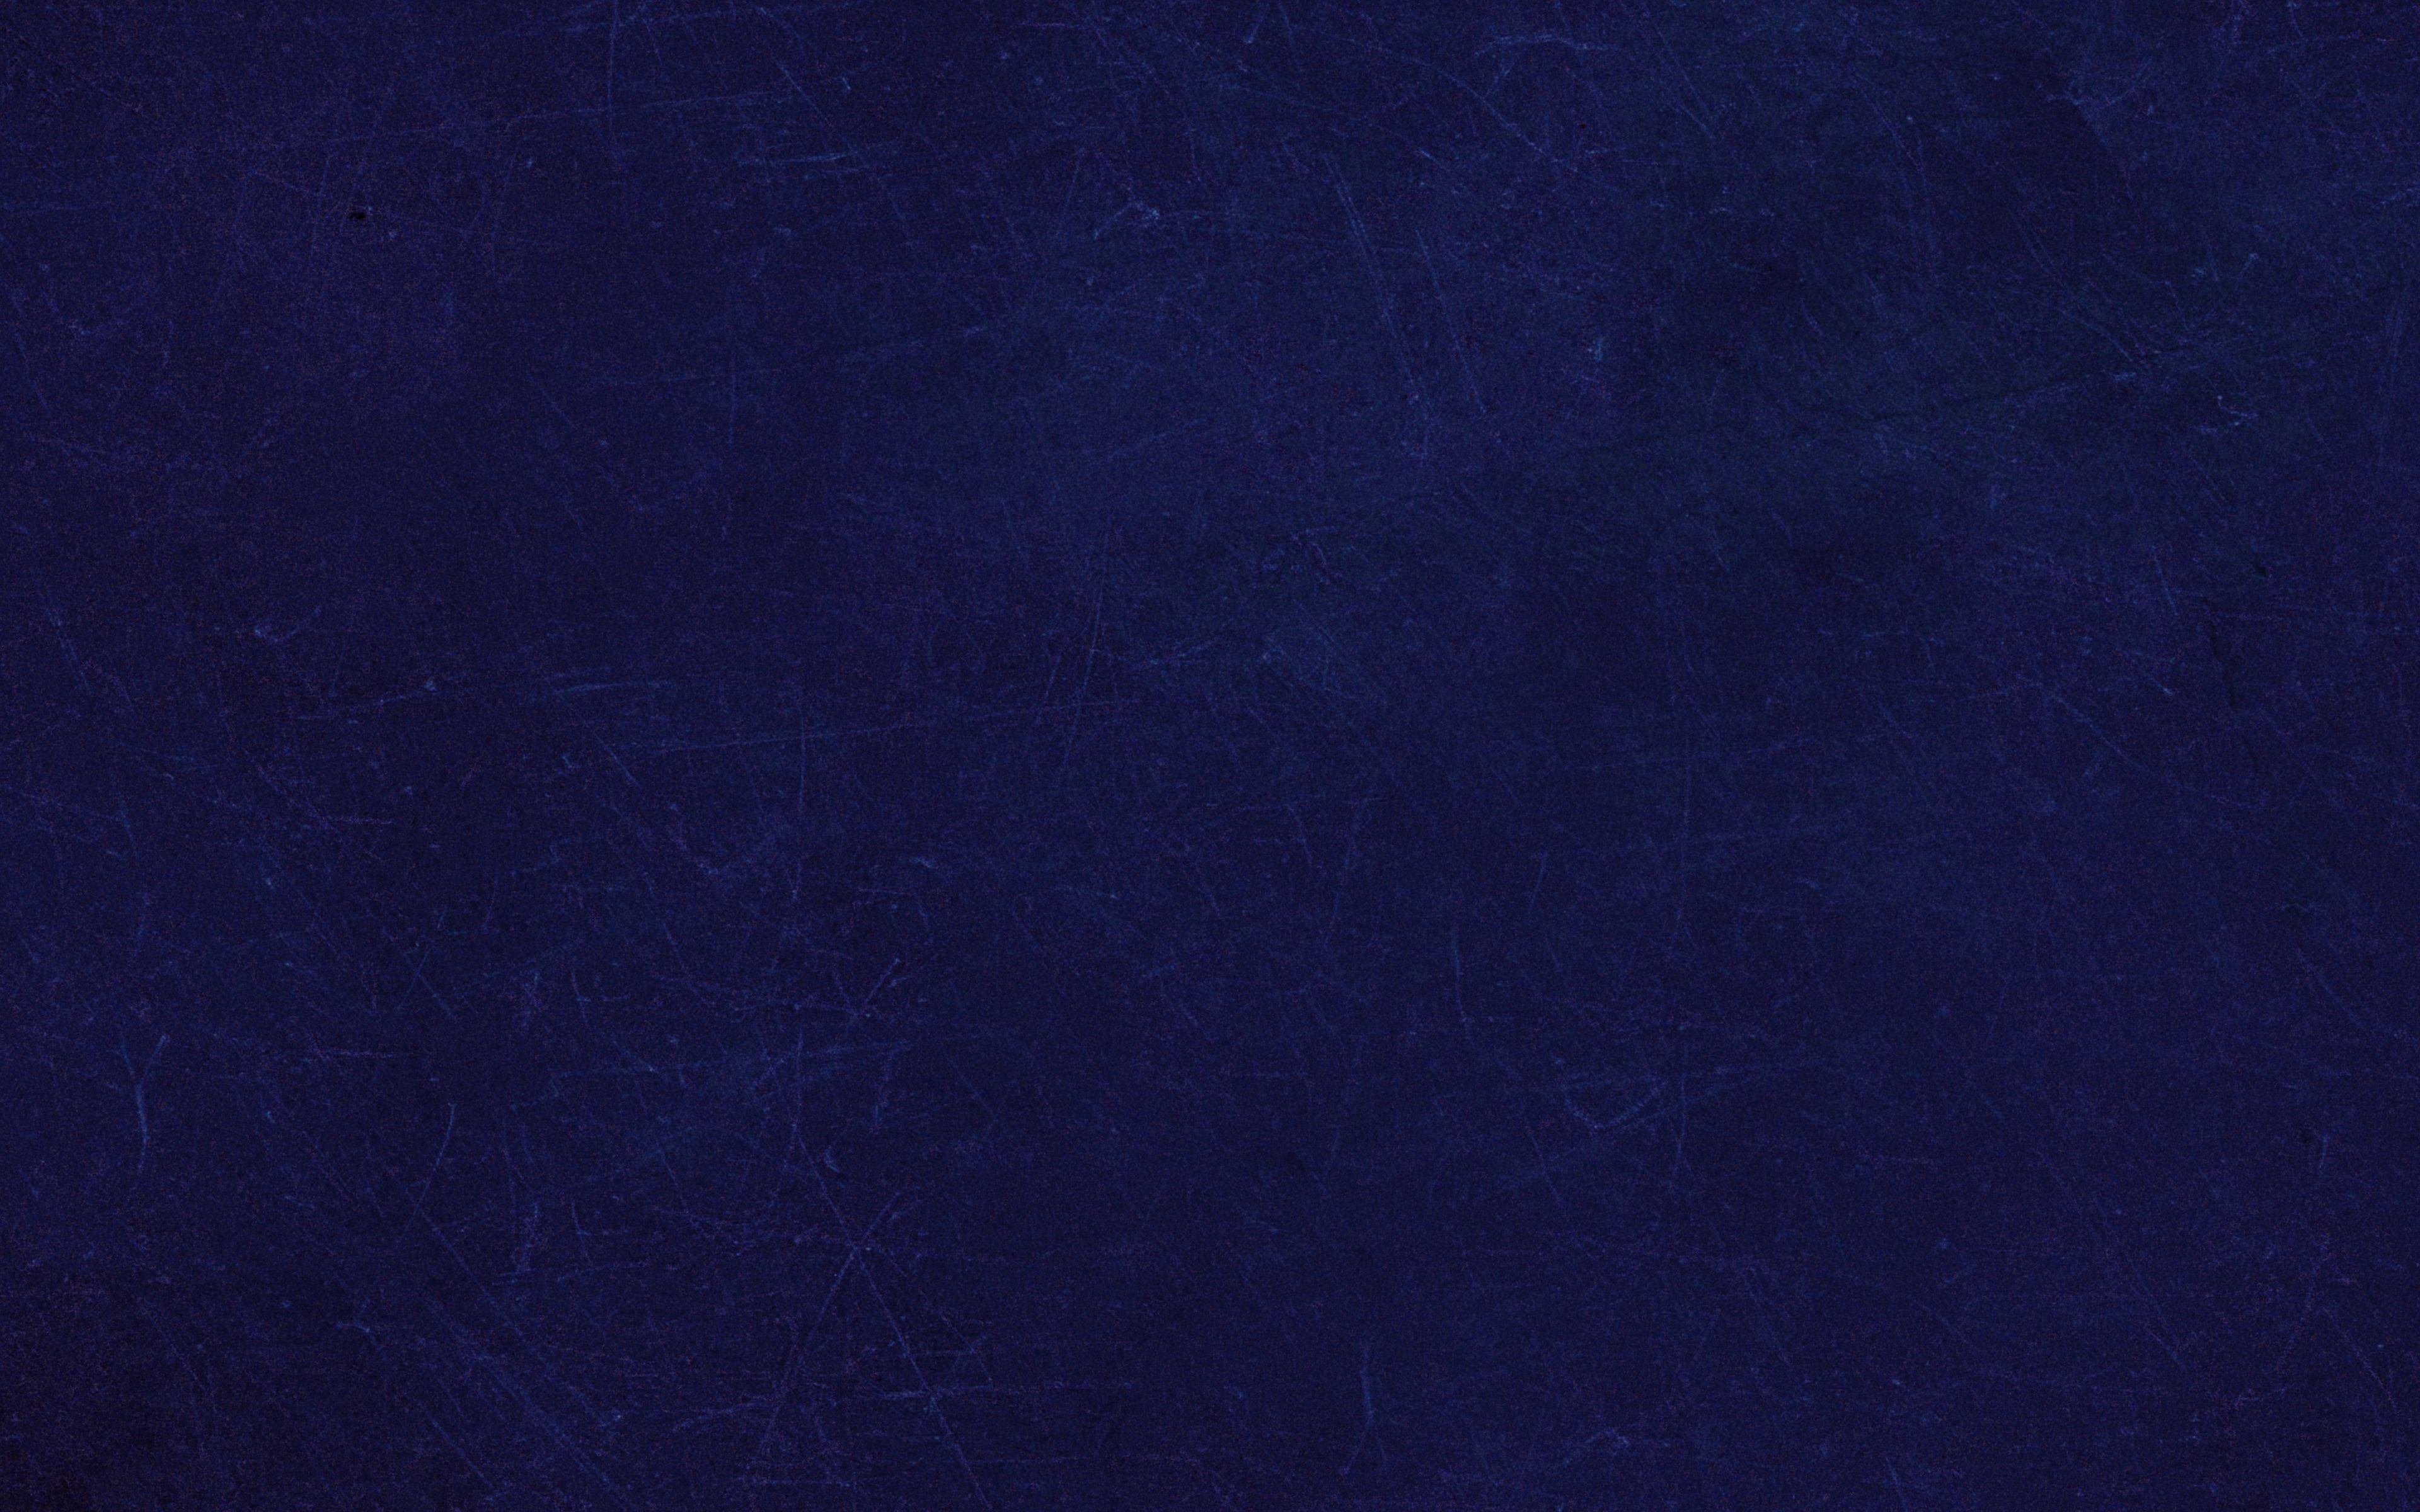 4K Ultra Dark Blue Hd Wallpapers - Top Free 4K Ultra Dark Blue Hd